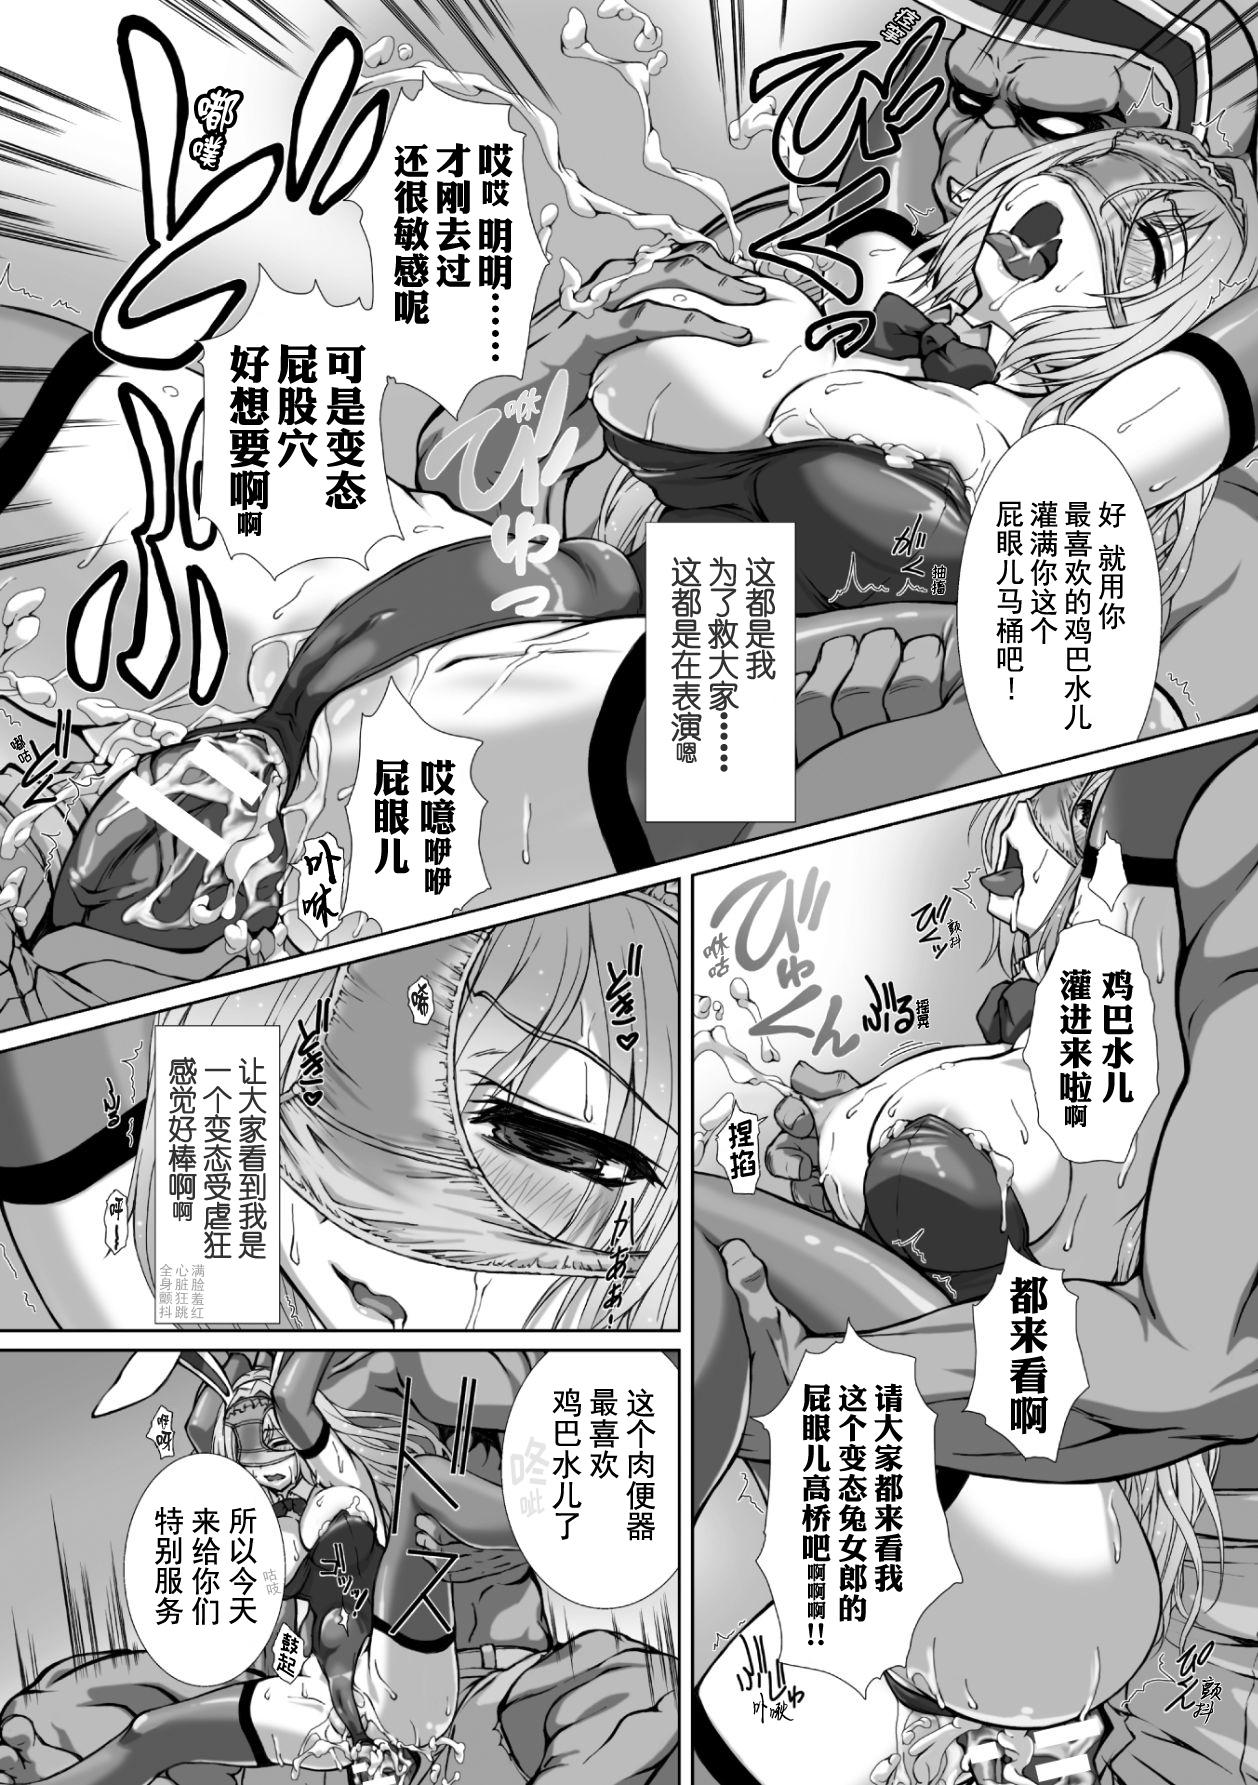 Hengen Souki Shine Mirage THE COMIC 1 | 变幻装姬闪耀幻影 官方漫画第一卷 175